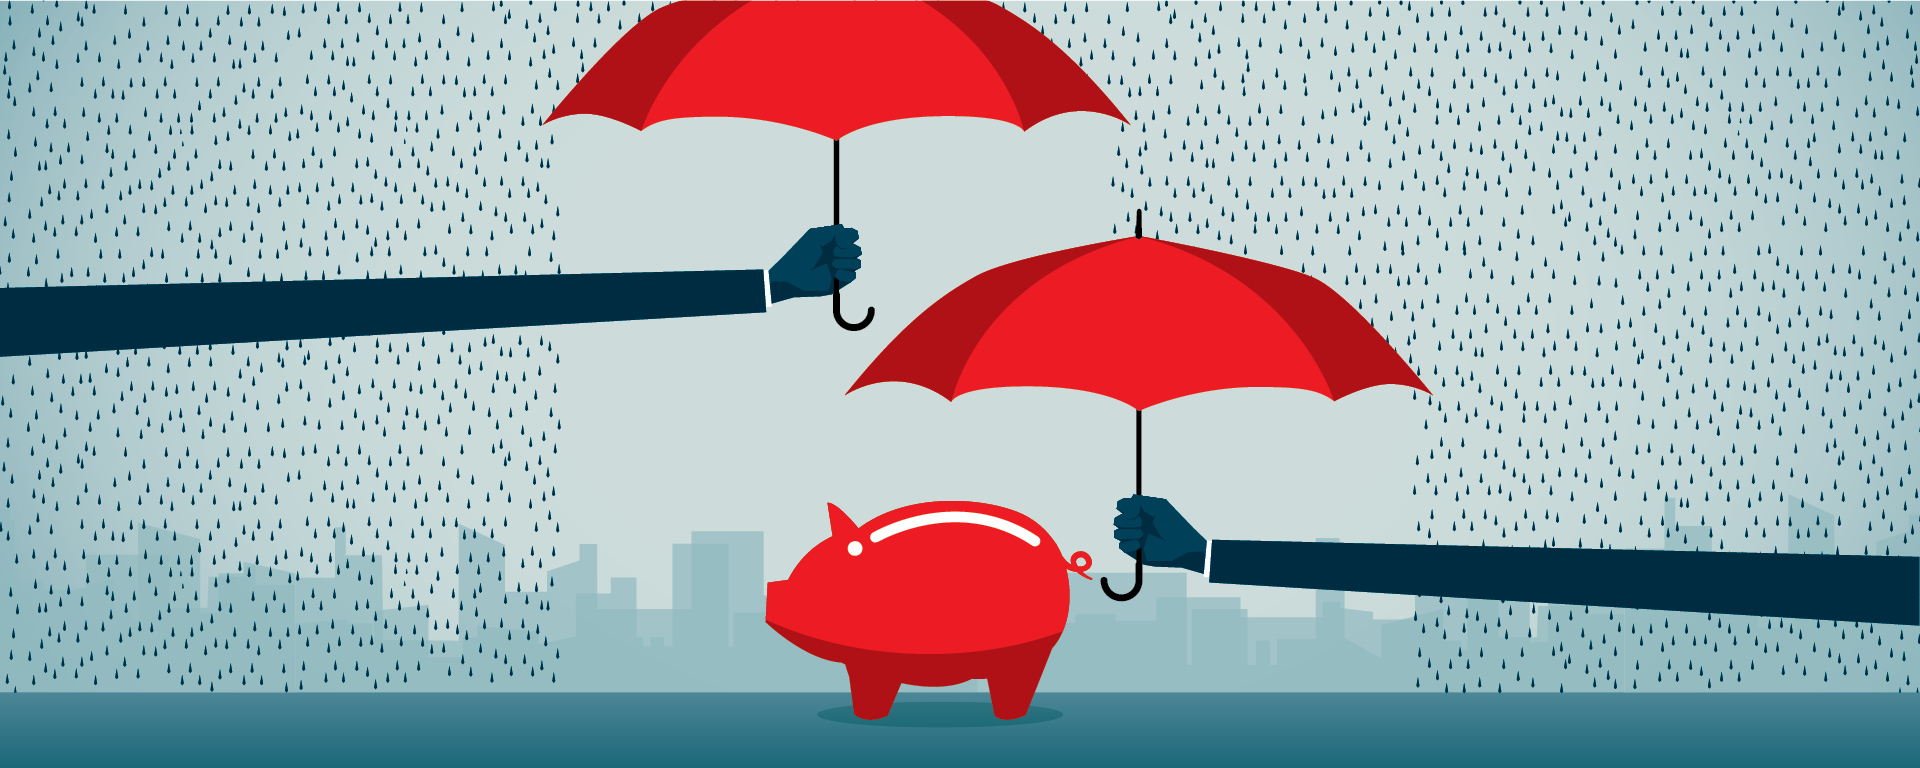 Illustration of two umbrellas protecting a piggybank.